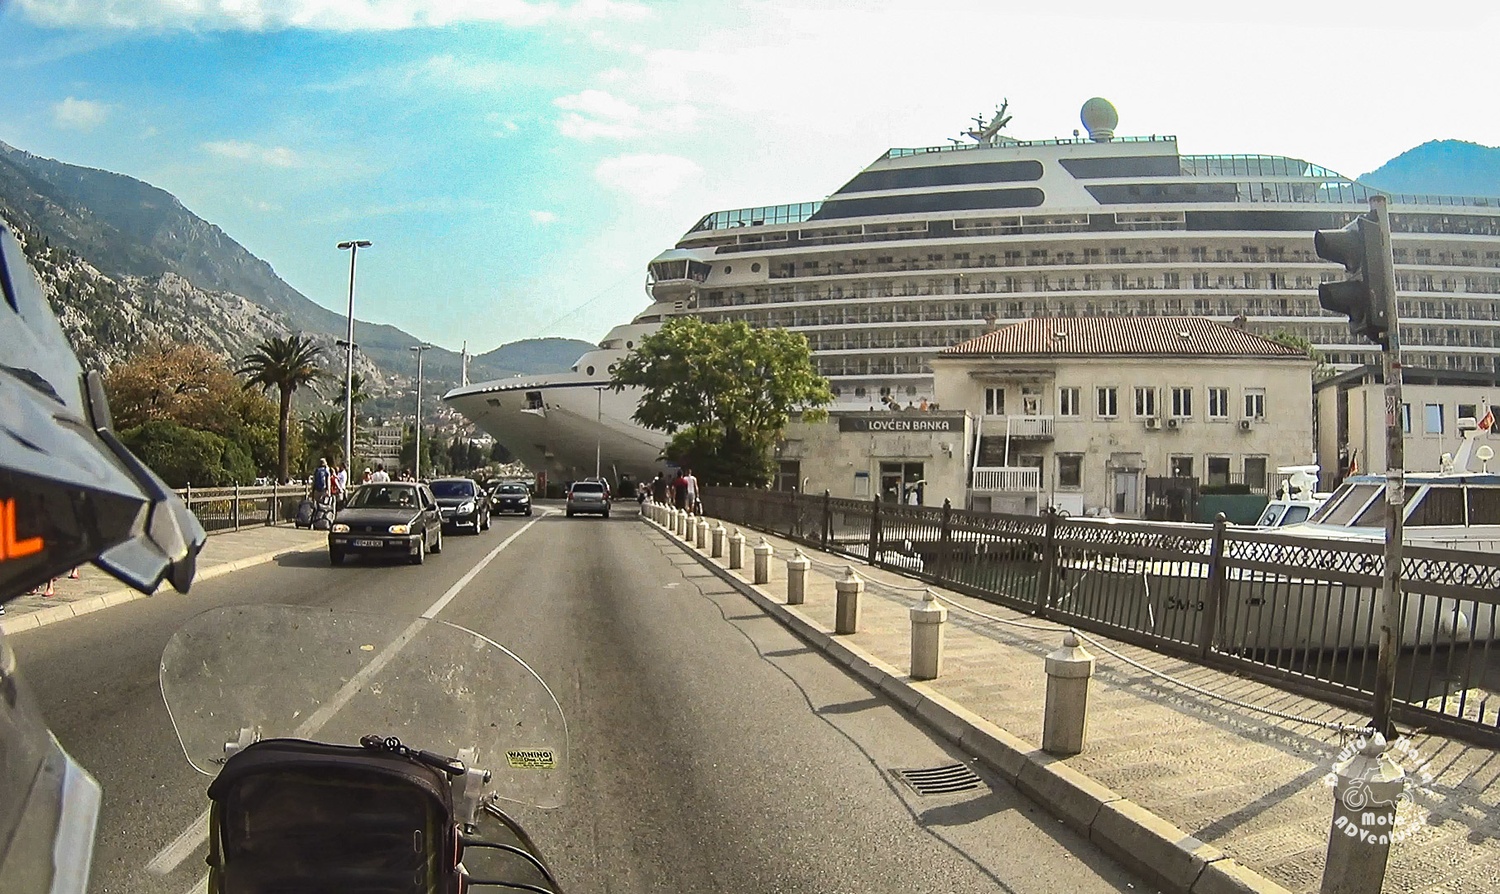 Port of Kotor